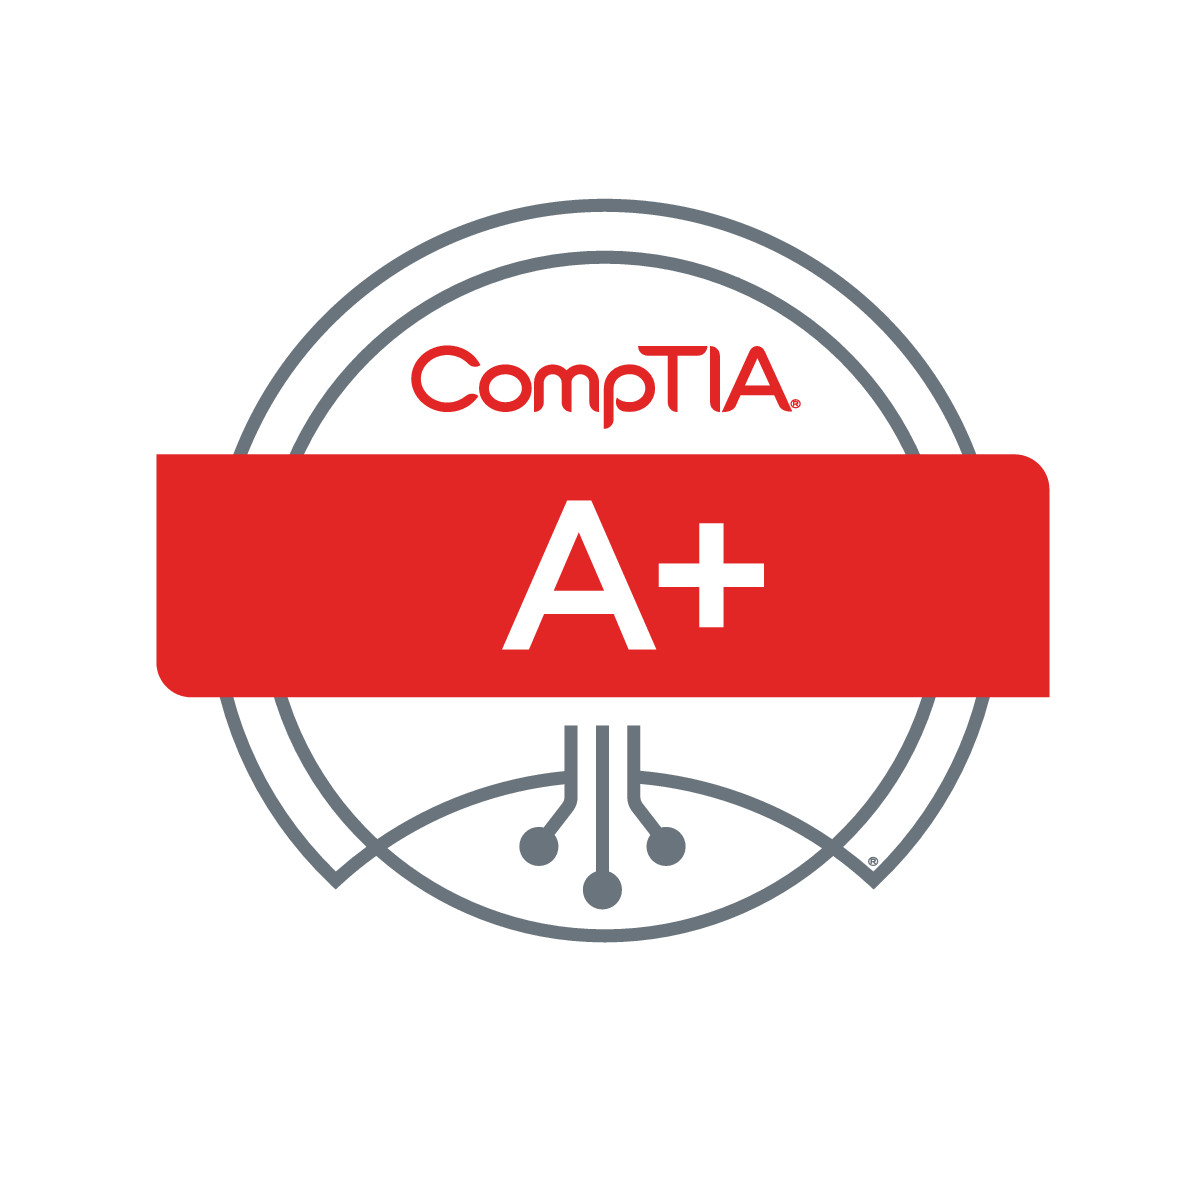 CompTIA A+ (Version 2019)